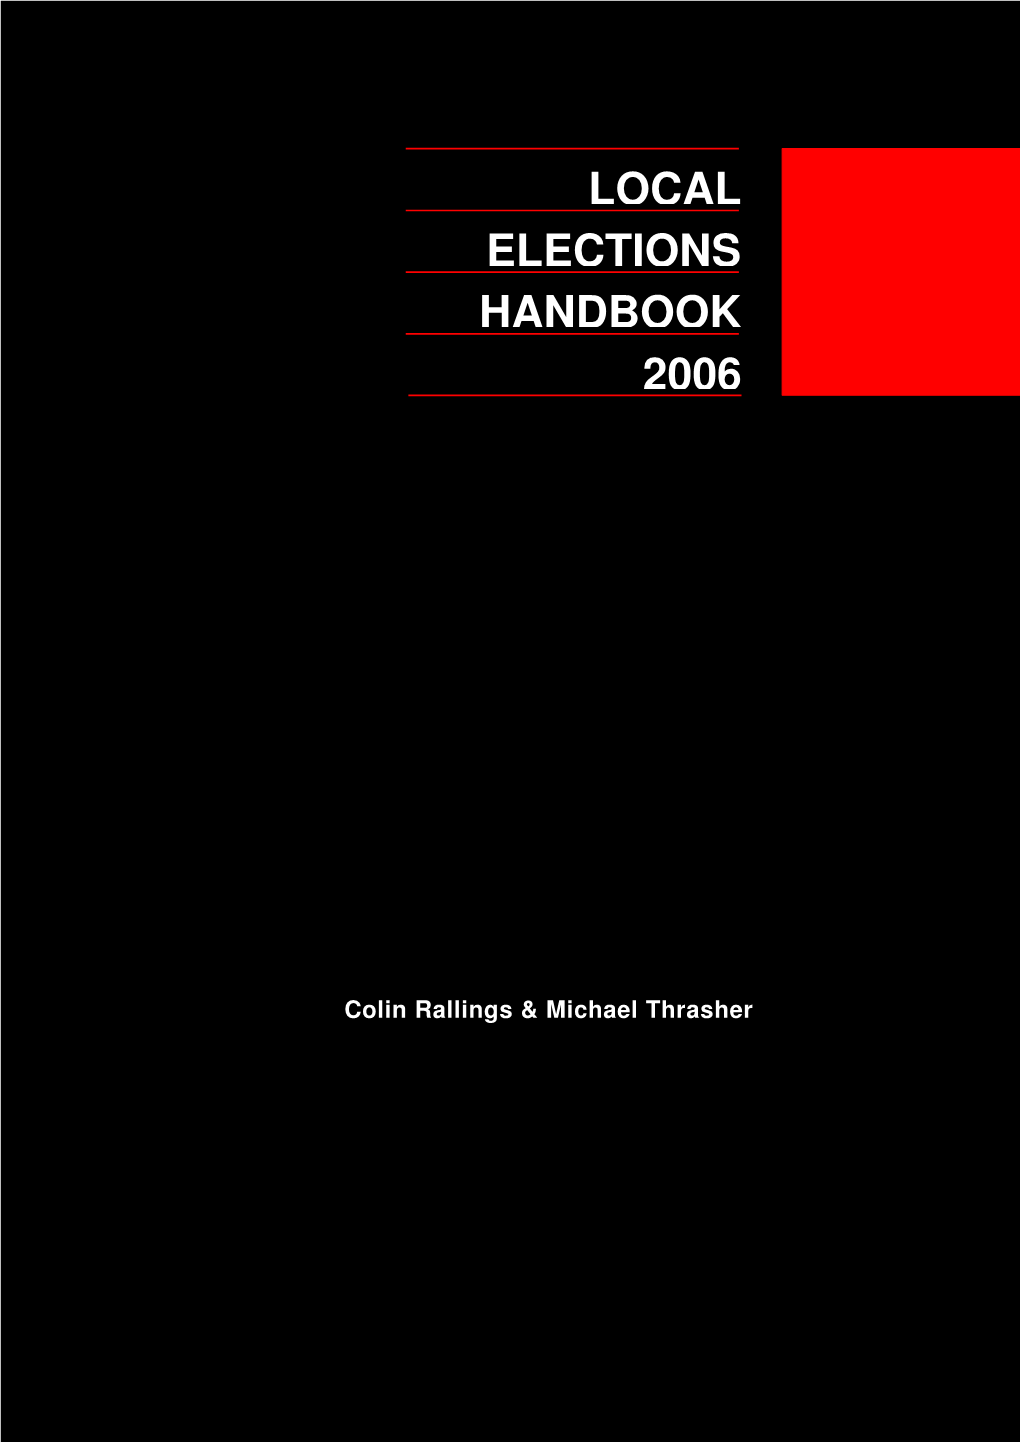 Local Elections Handbook 2006 Complete